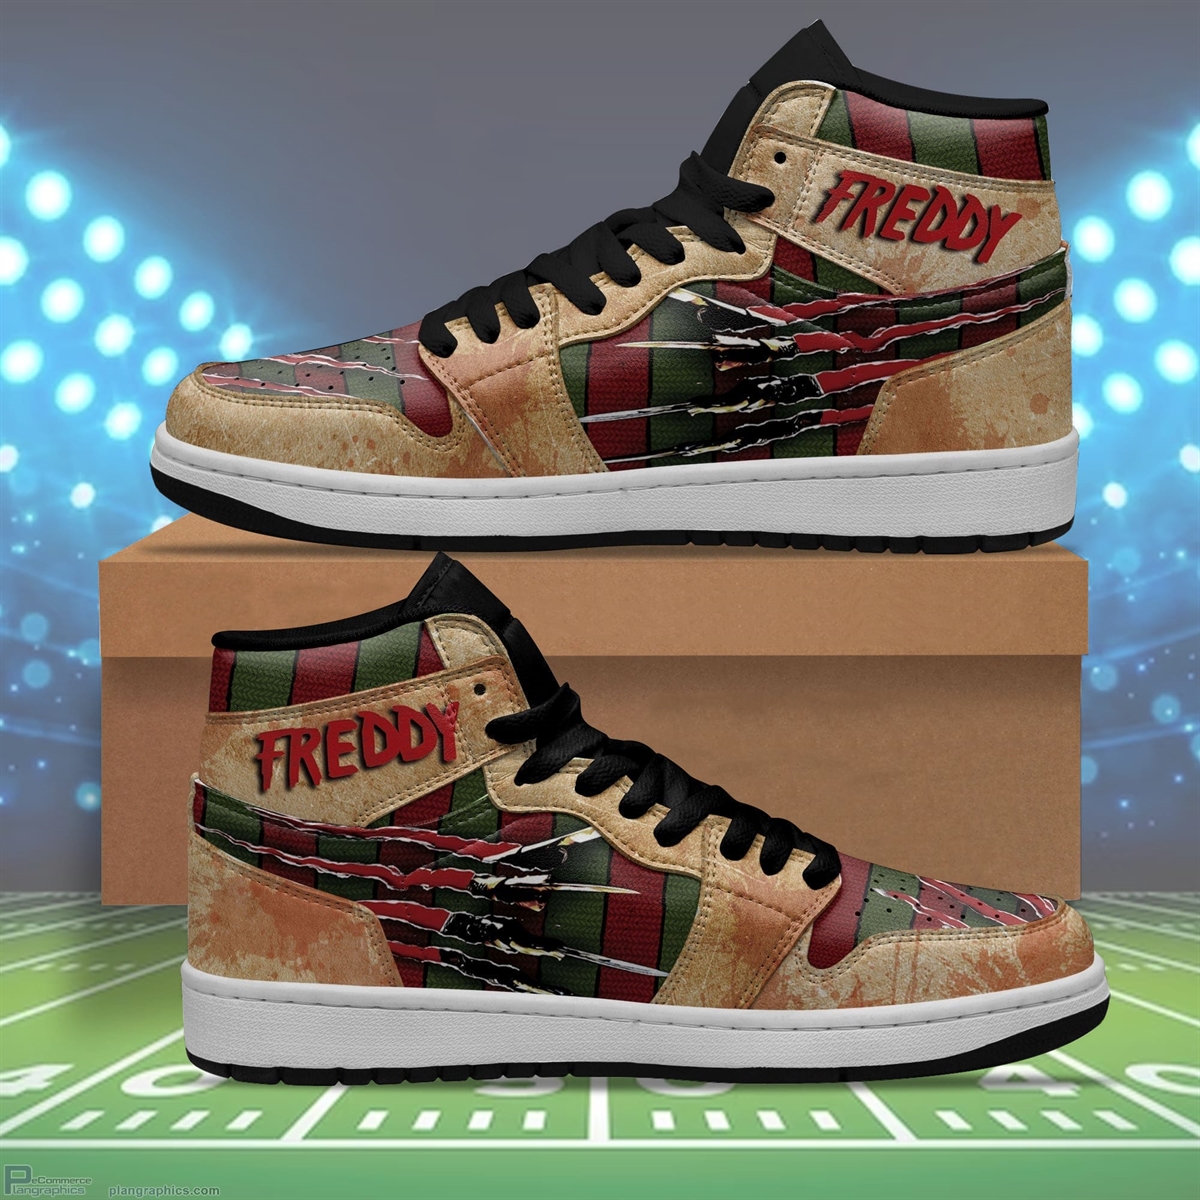 Freddy Krueger Air Jordan 1 High Sneaker Boots A Nightmare on Elm Street